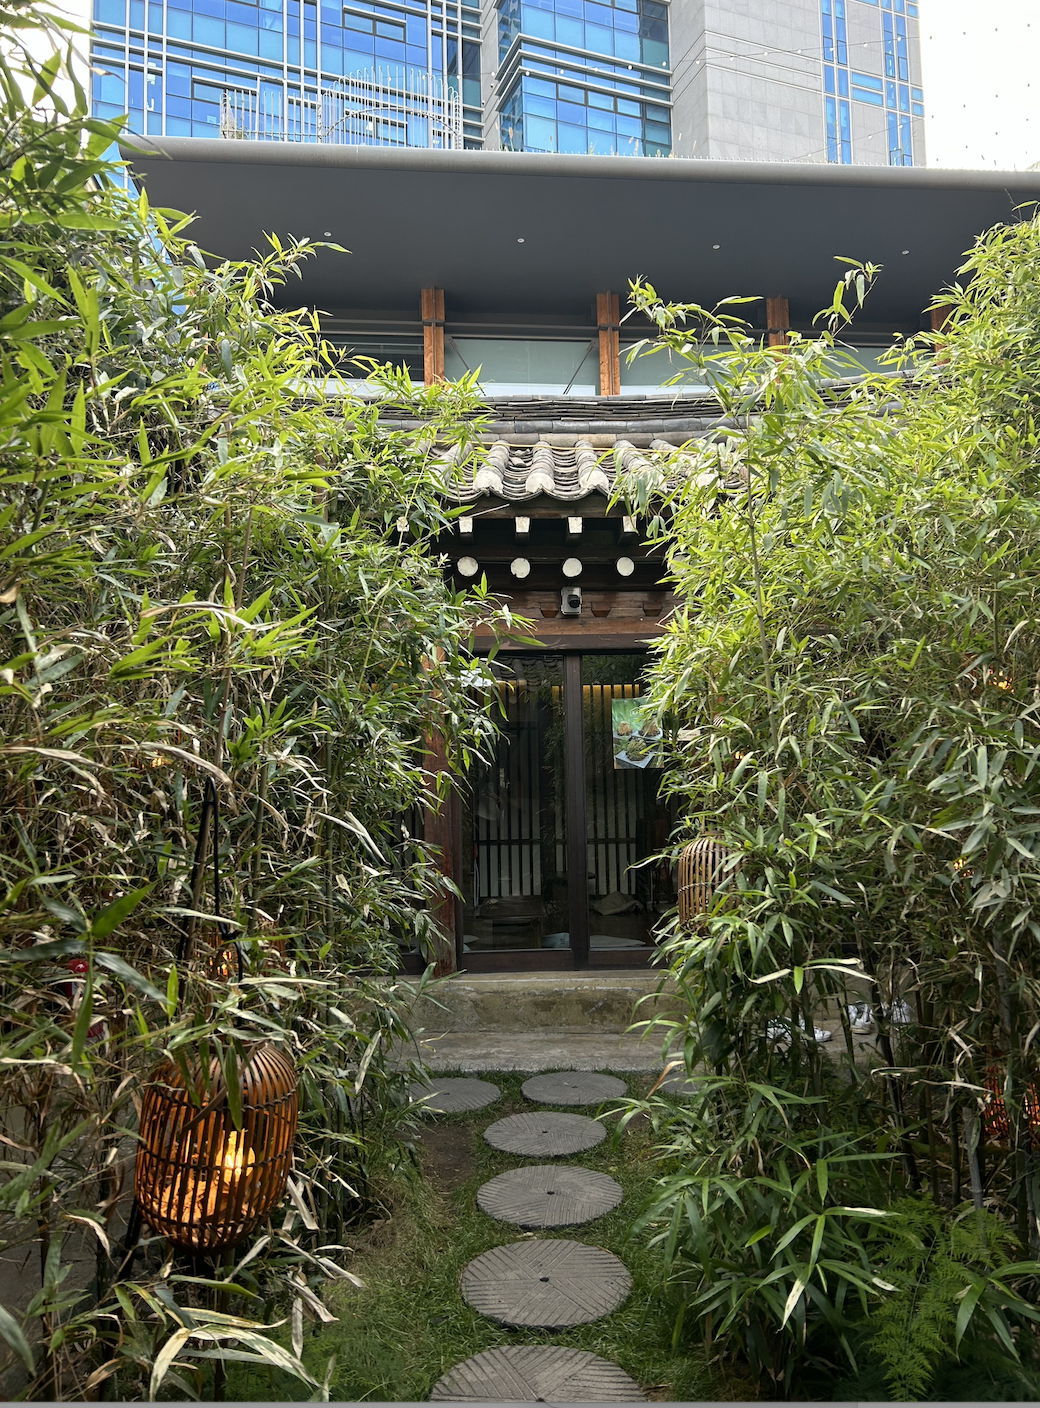 Entrance to a hanok style cafe